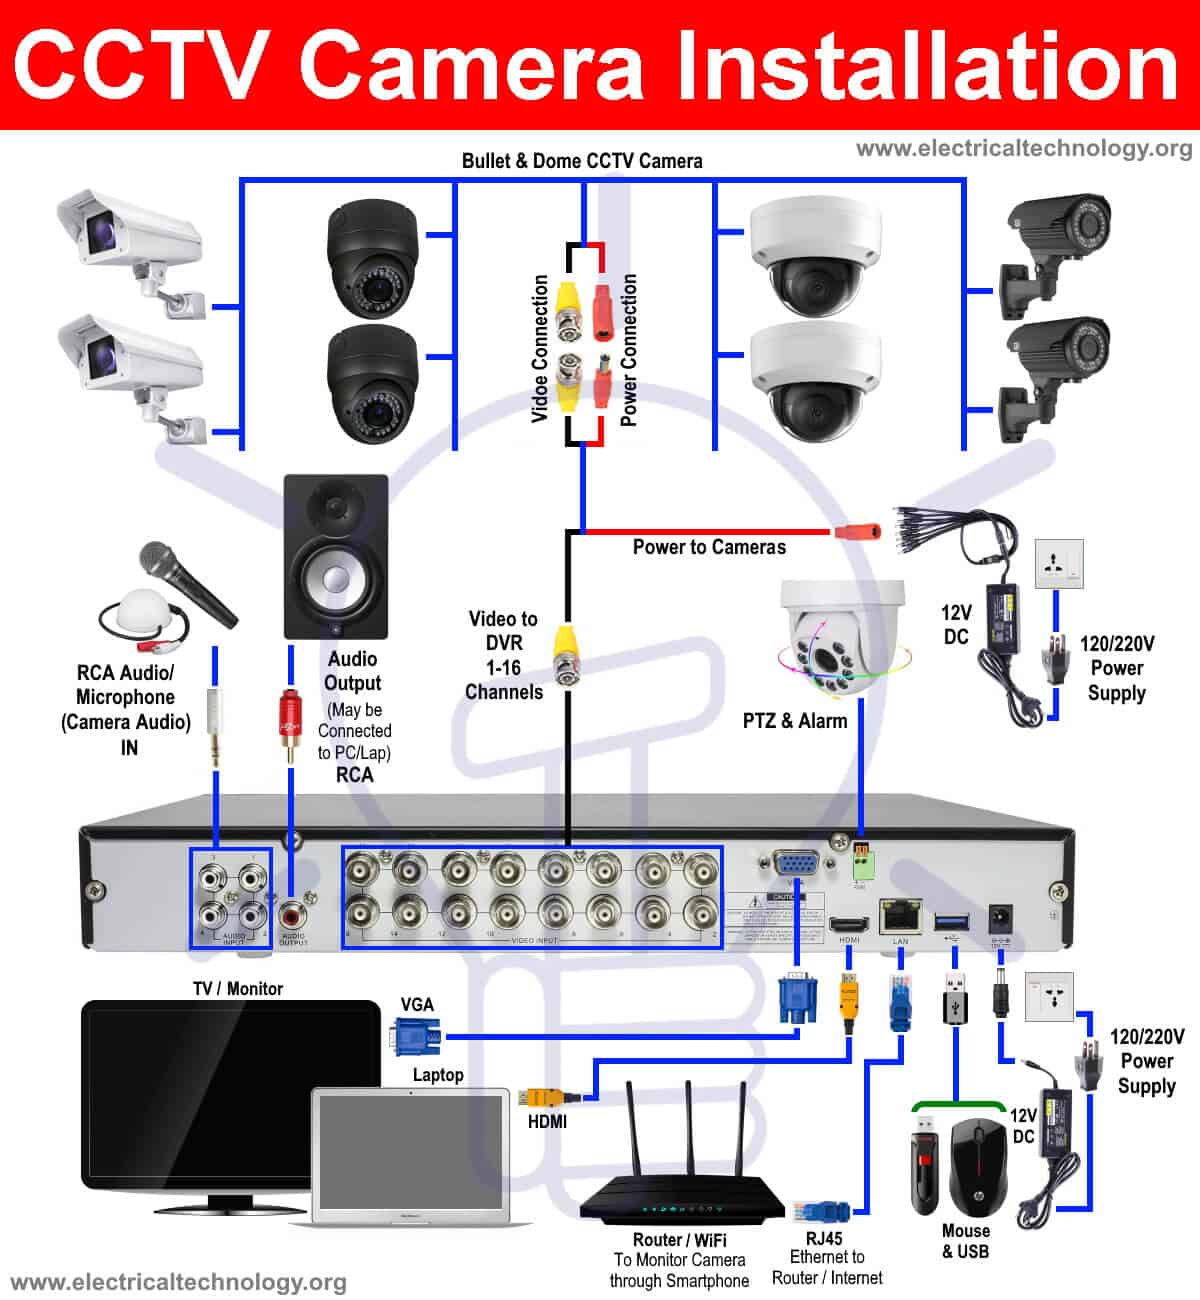 How to Install a CCTV Camera? CCTV Camera Installation with DVR